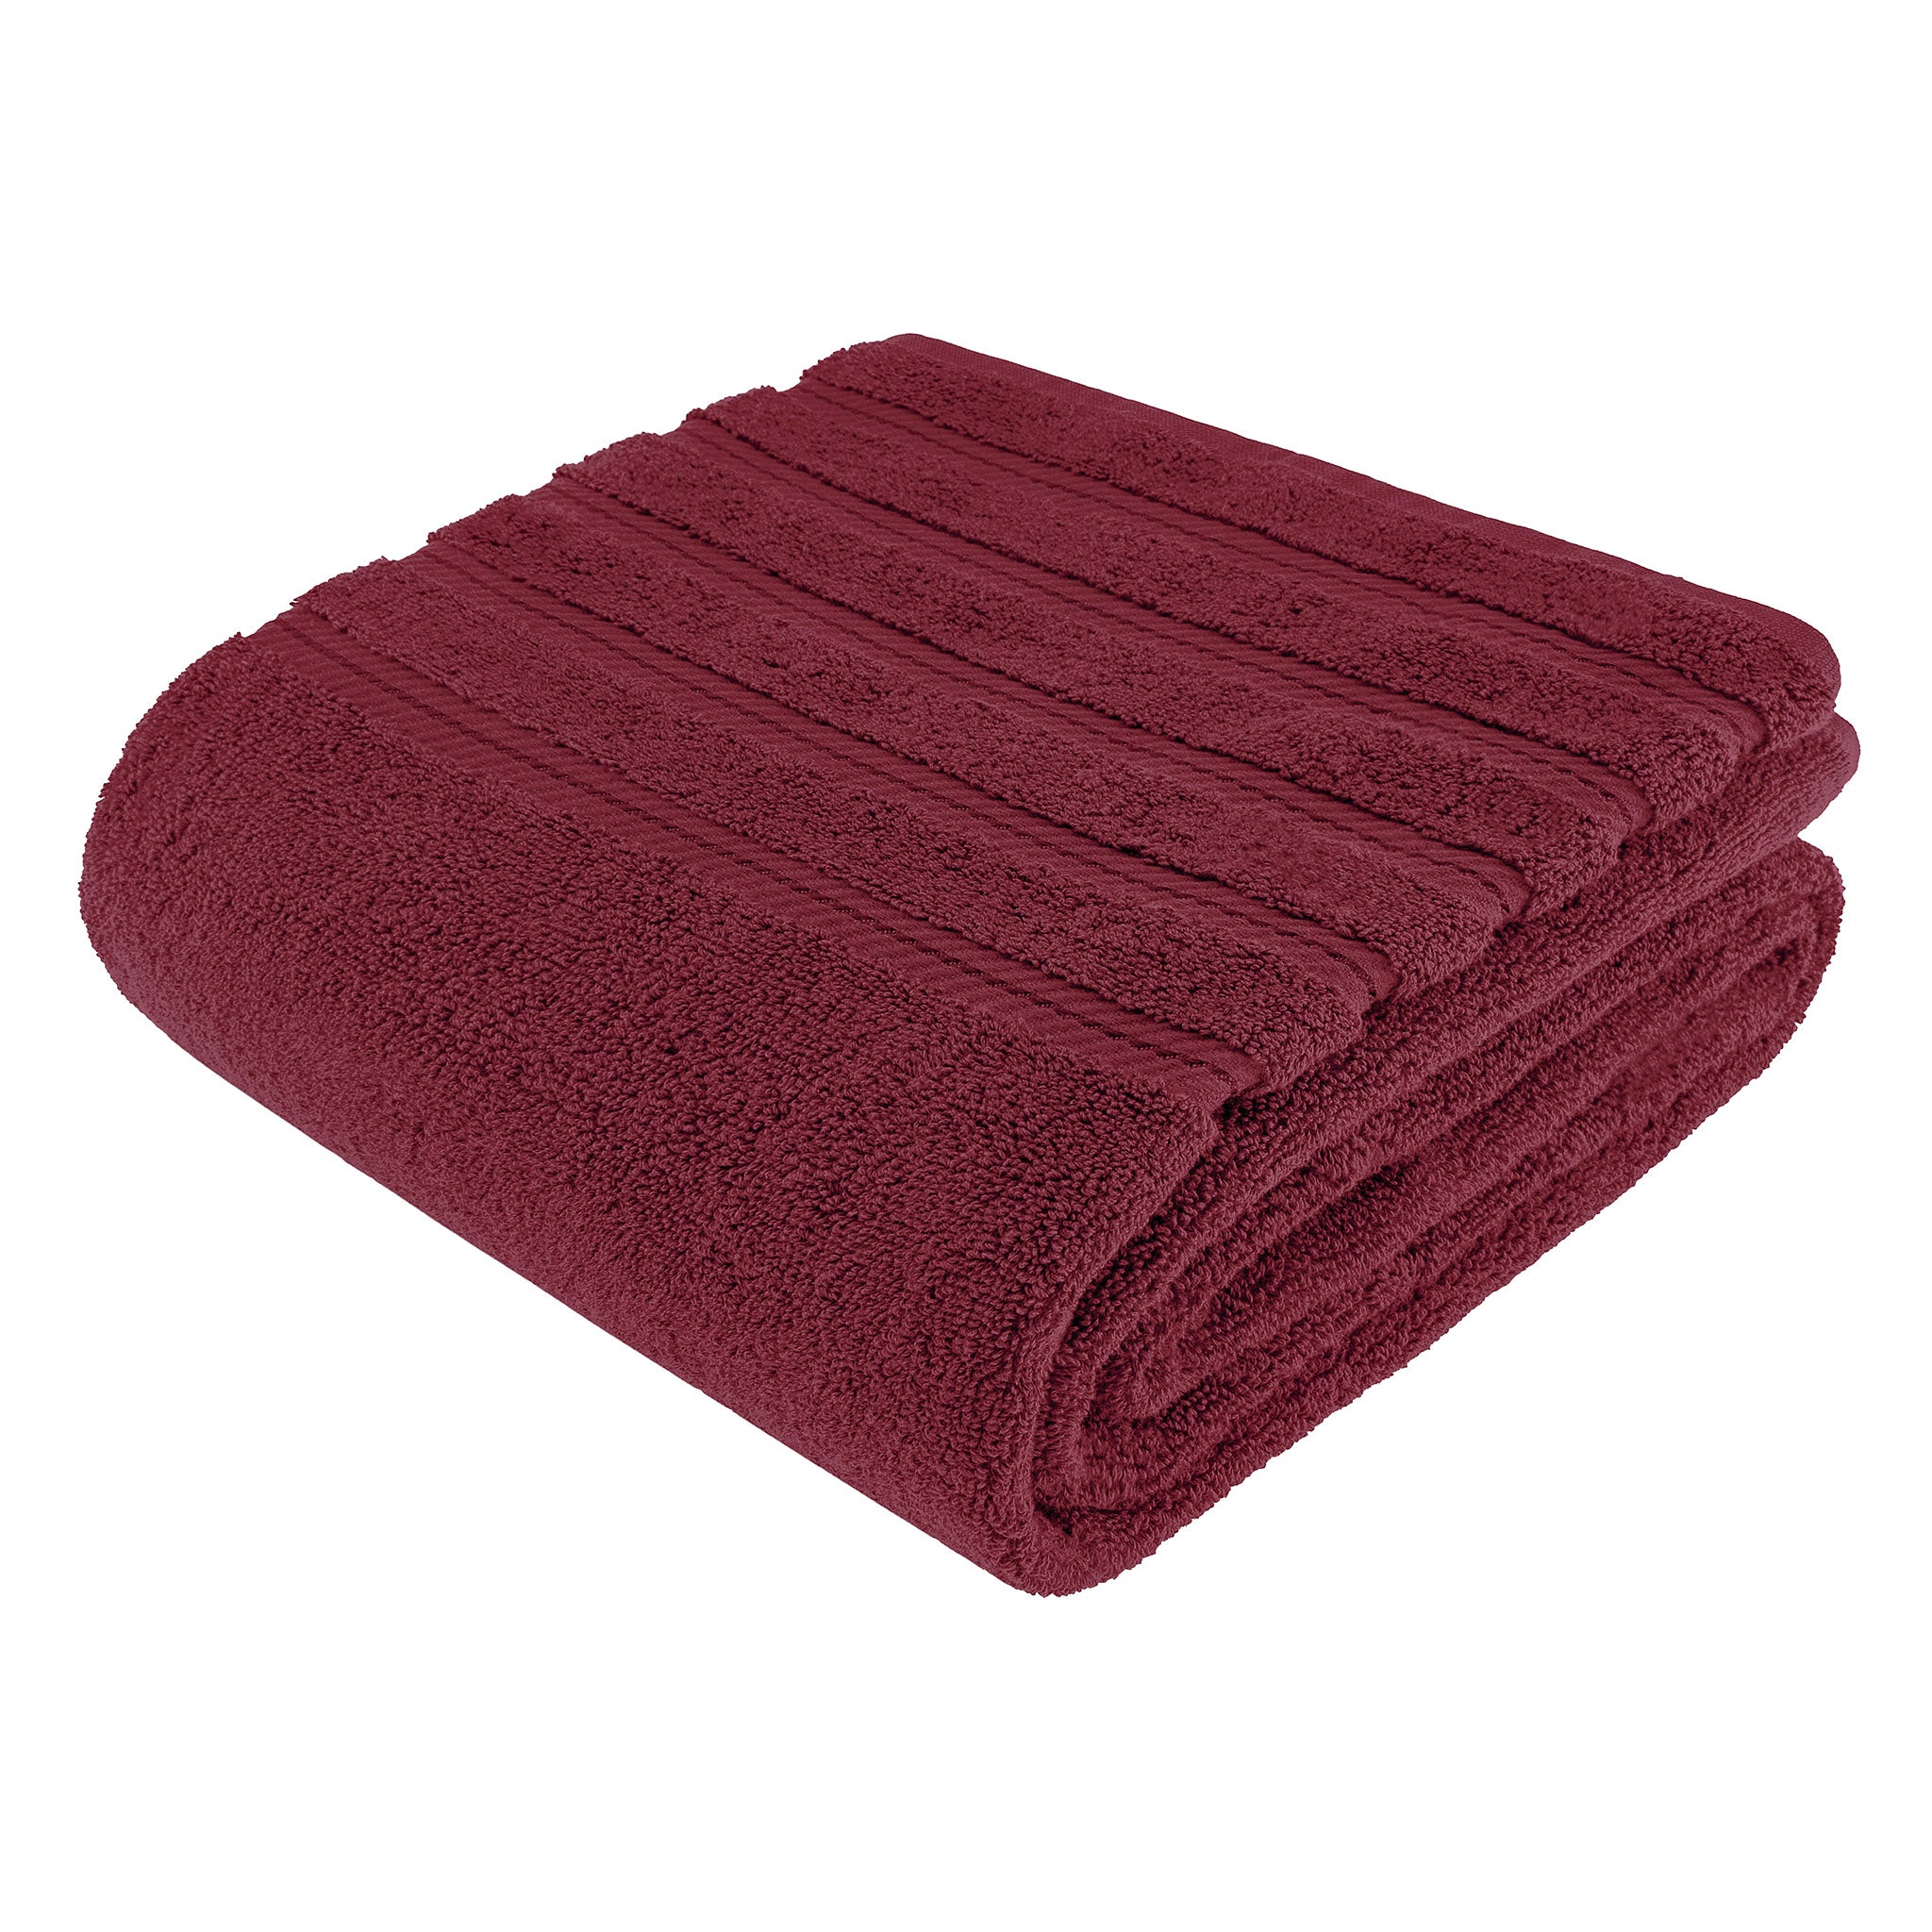 American Soft Linen 35x70 Inch 100% Turkish Cotton Jumbo Bath Sheet bordeaux-red-7